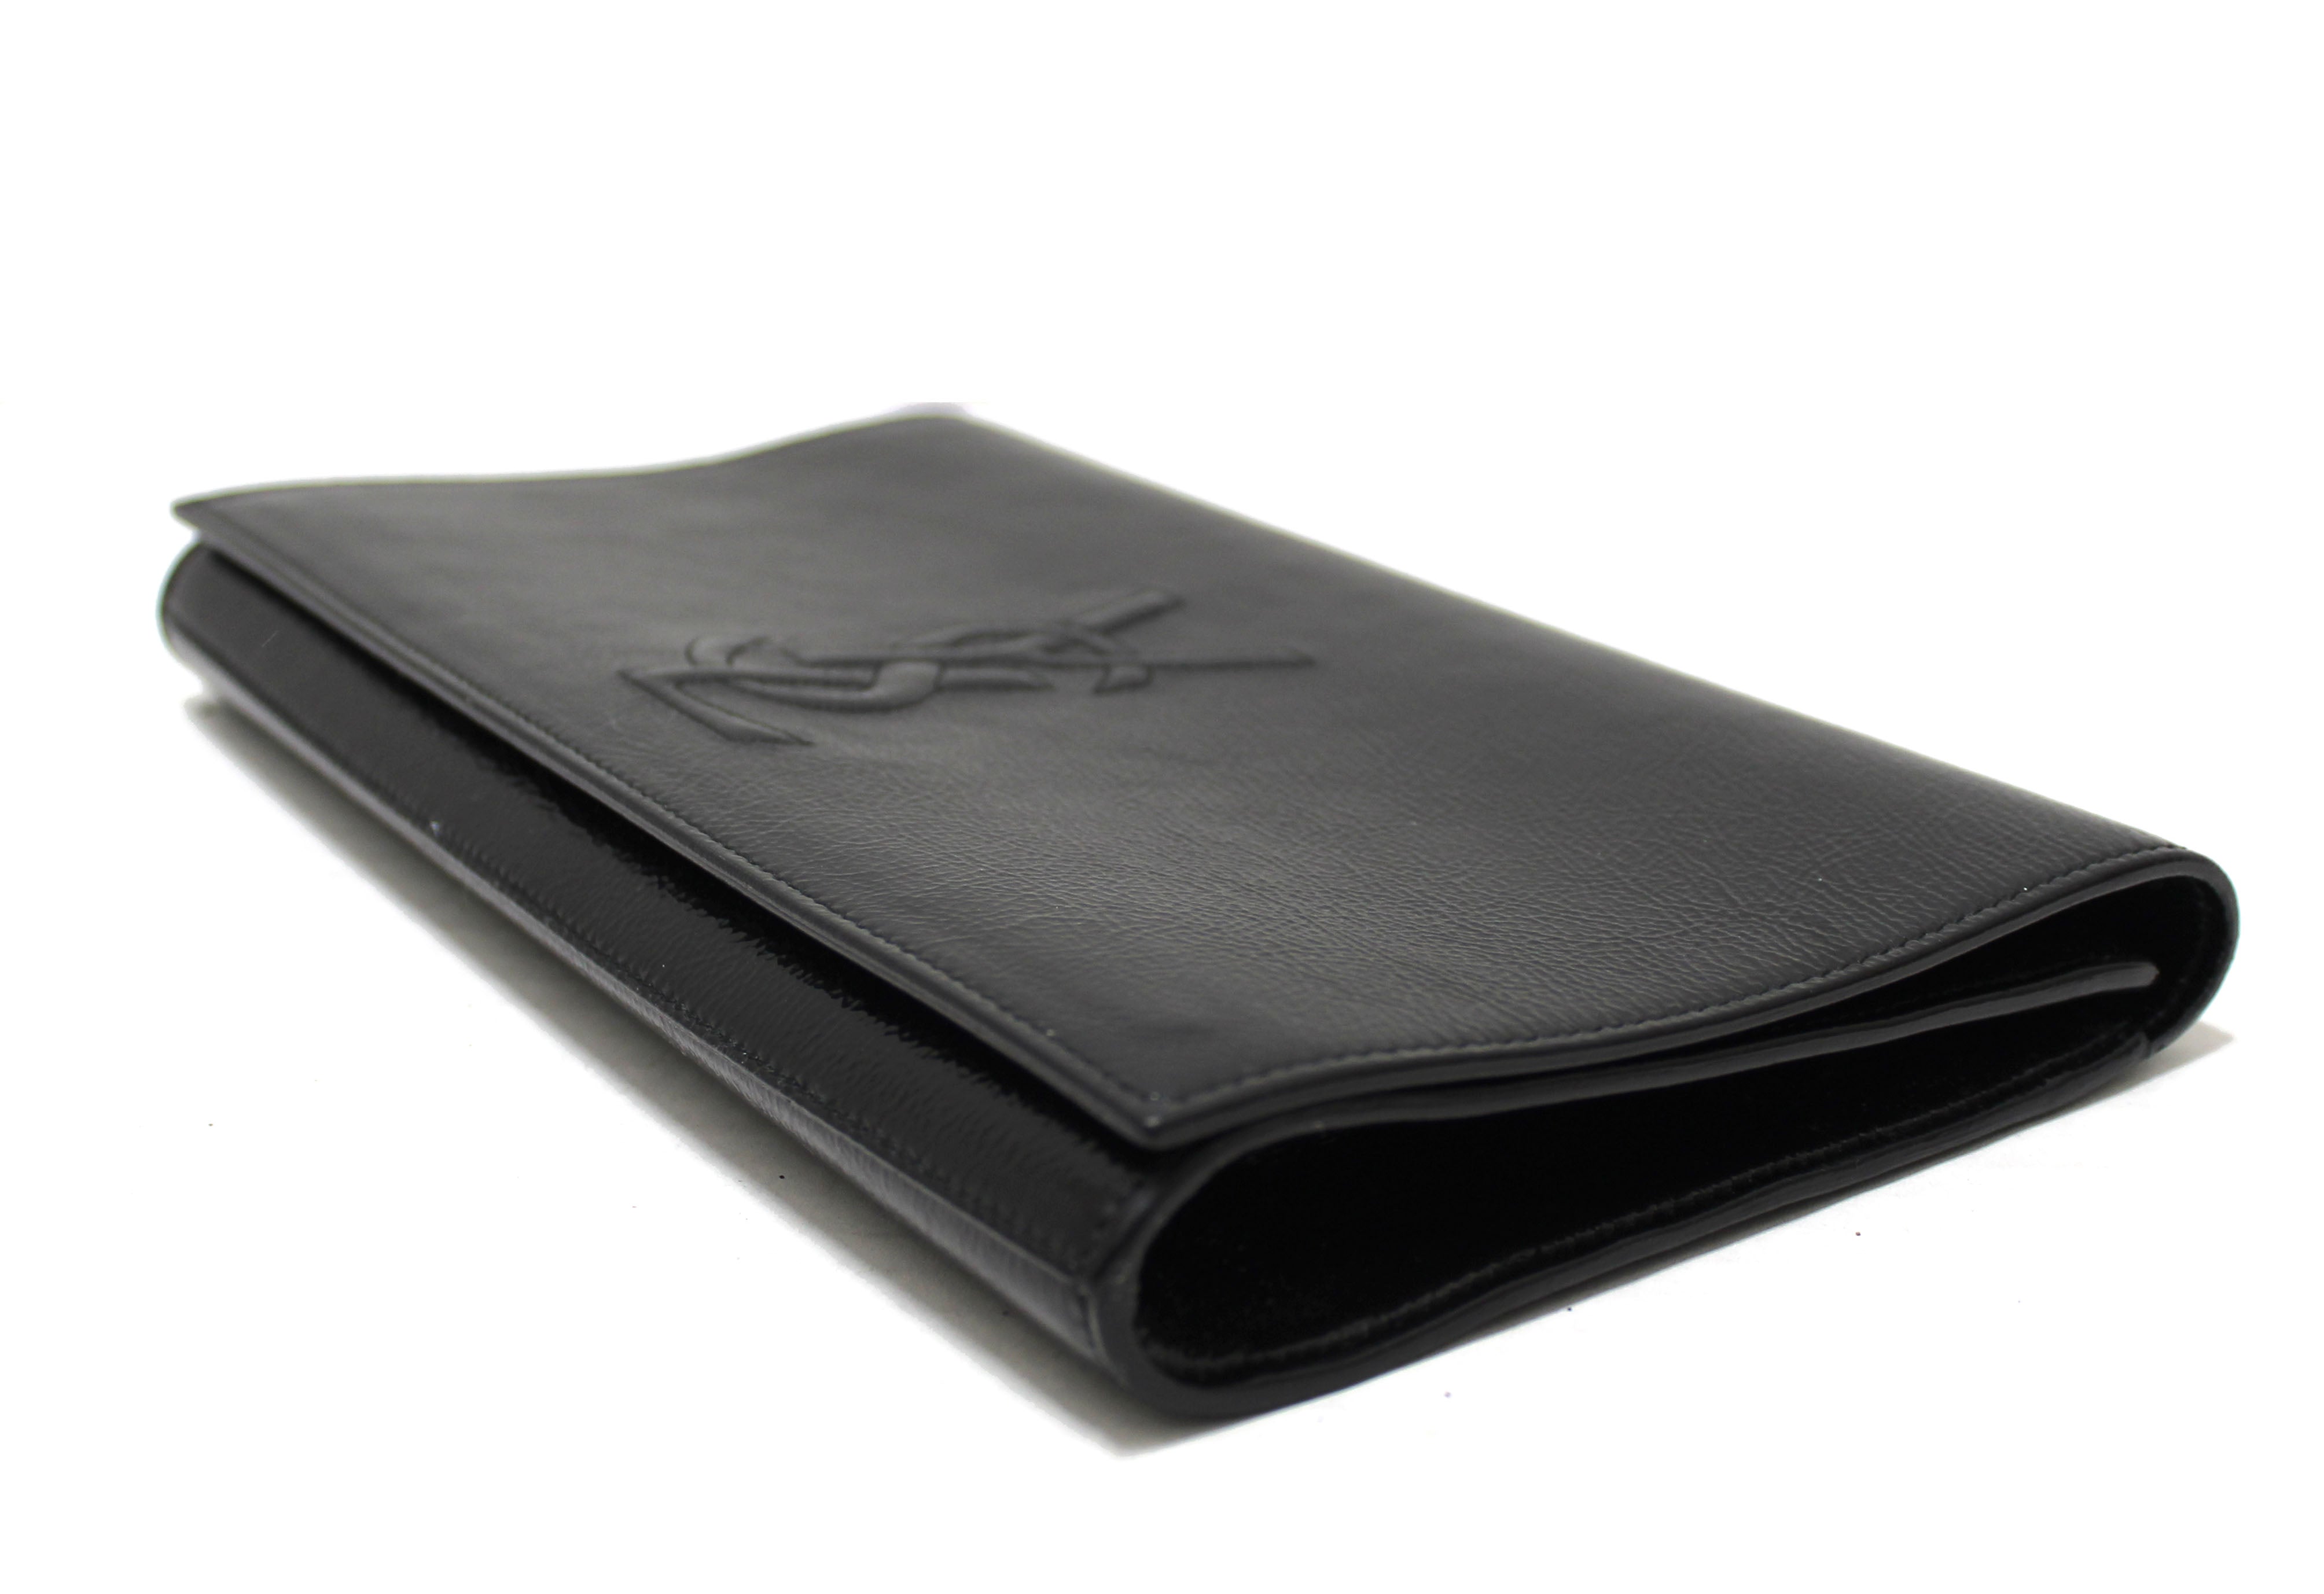 Authentic YSL Yves Saint Laurent Black Patent Leather Clutch Bag